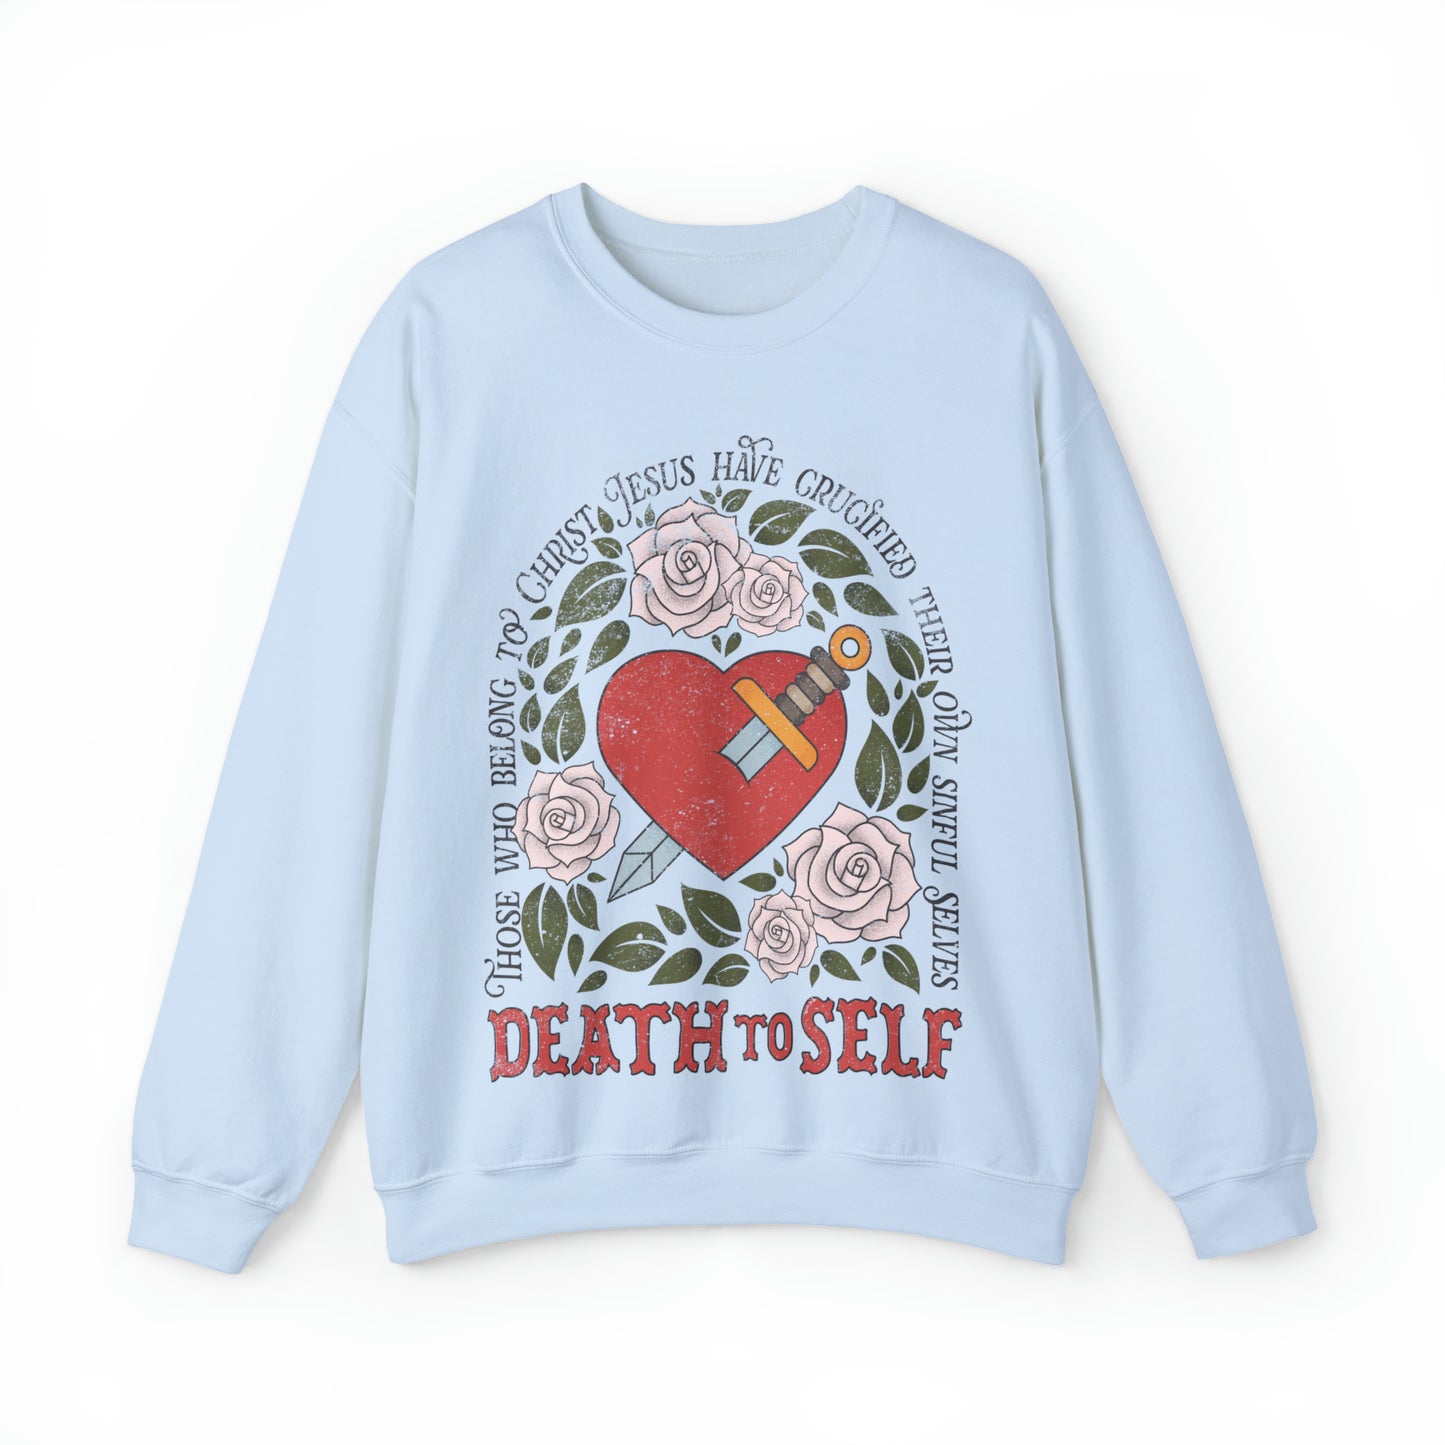 Death to Self Sweatshirt